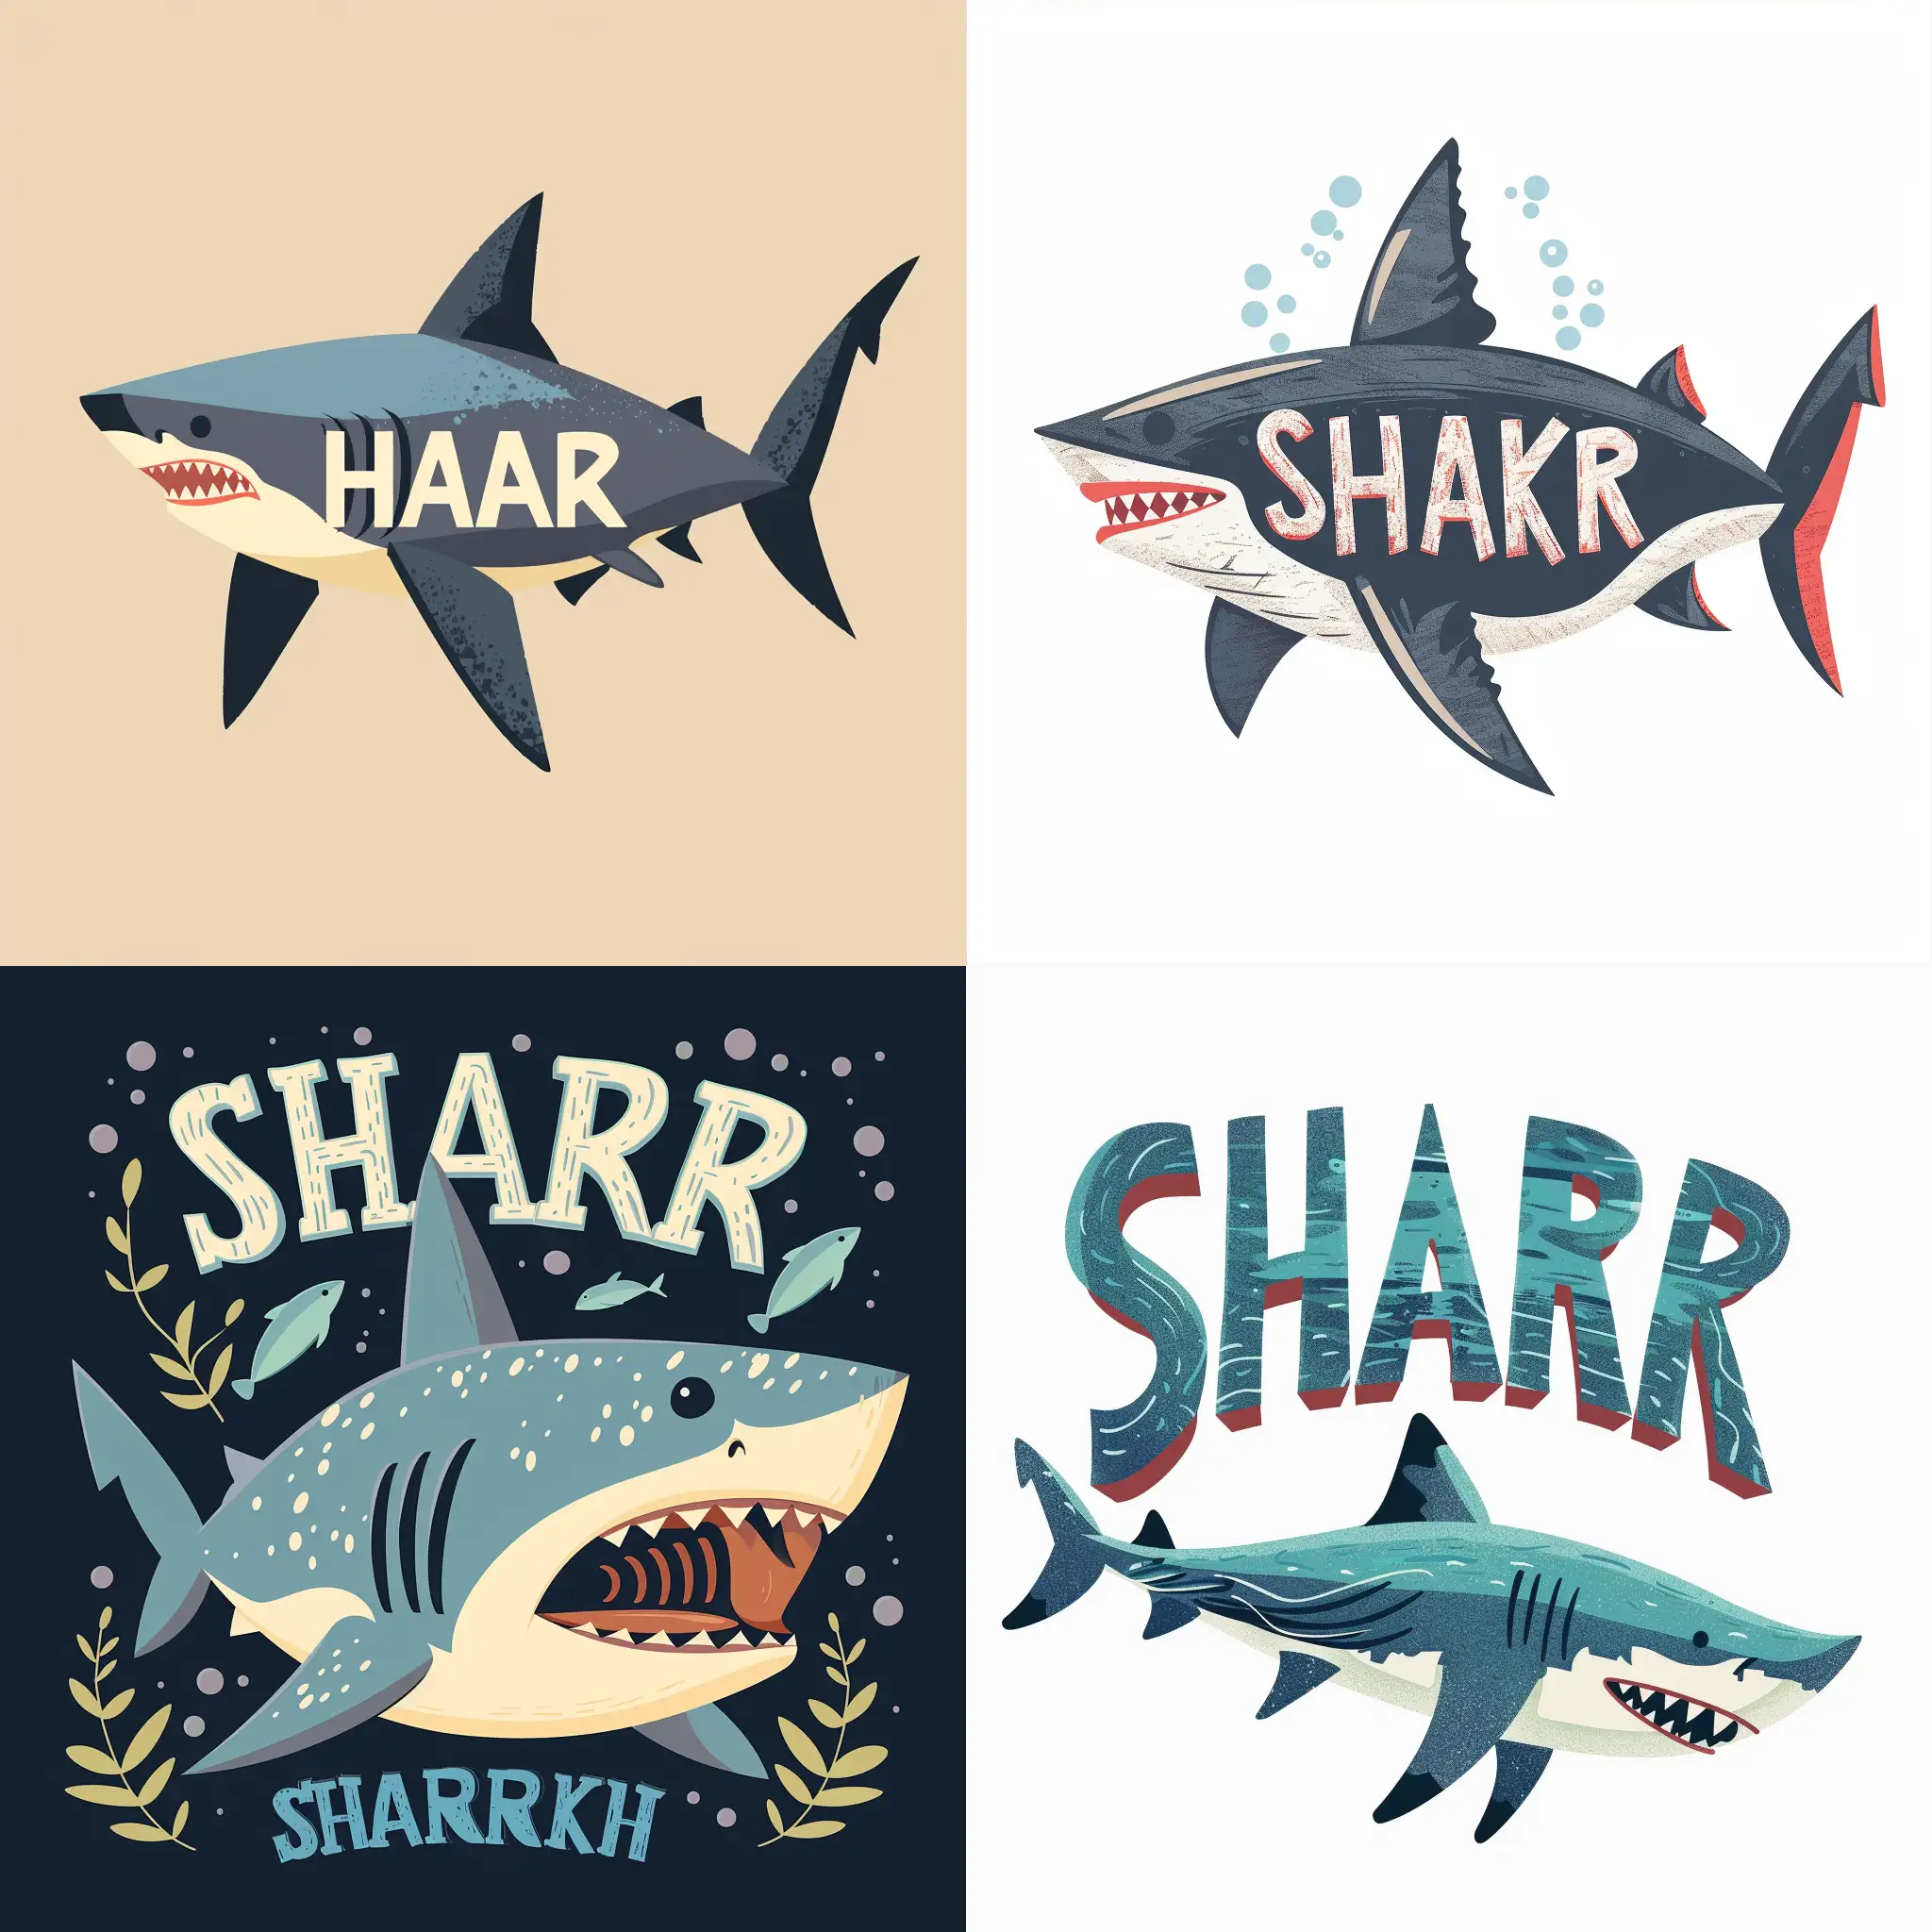 Flat-Vector-Design-SHARK-Inscription-Shaped-Like-a-Shark